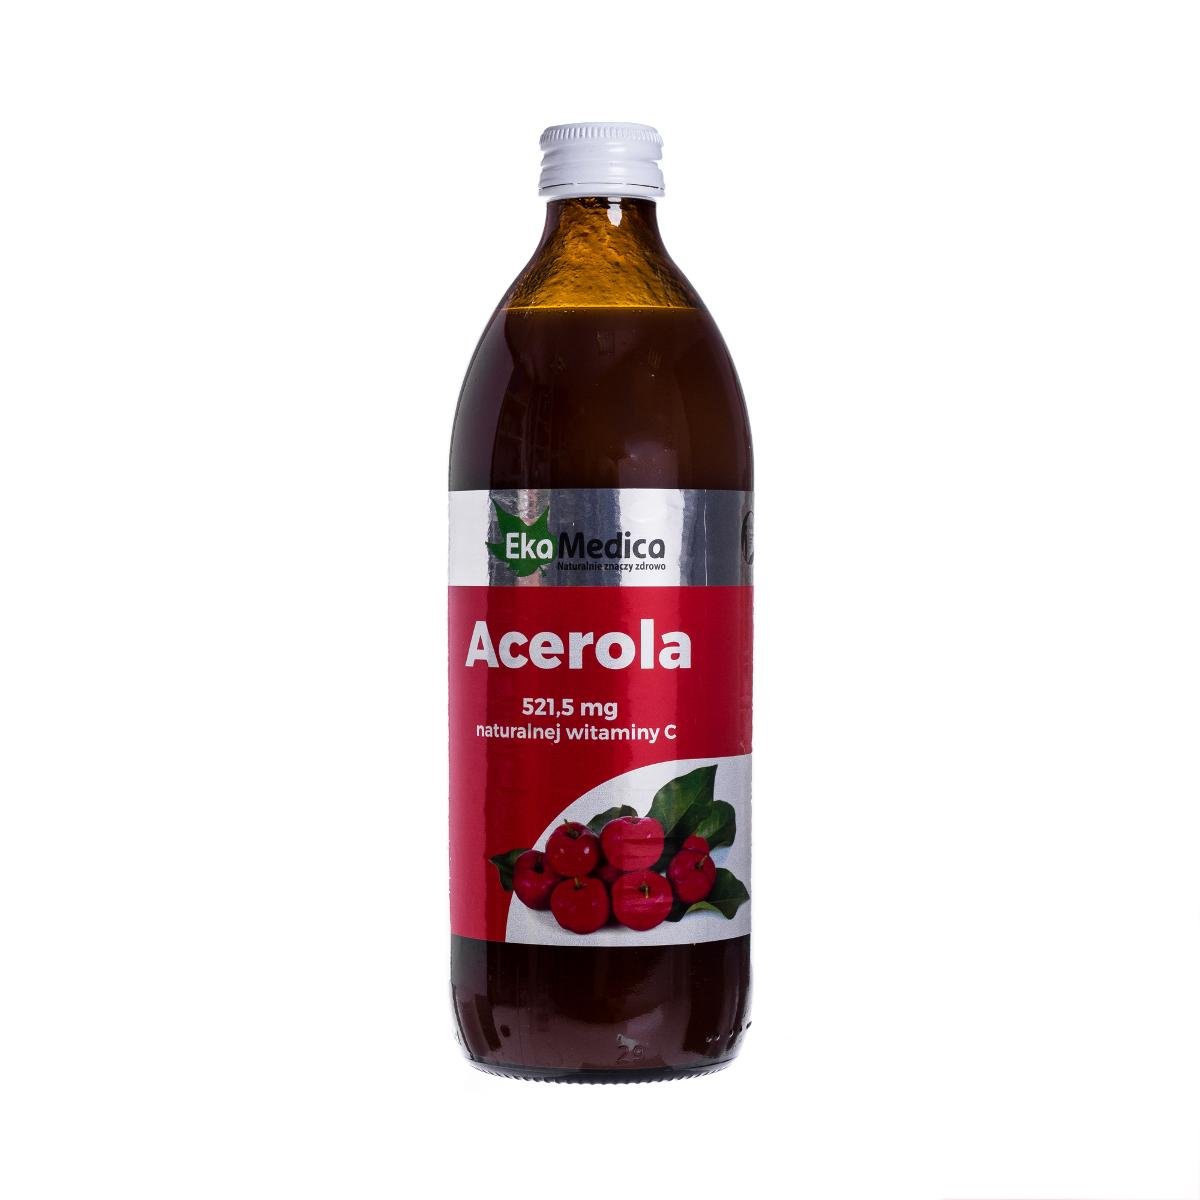 Фото - Вітаміни й мінерали Ekamedica, Acerola 521,5 mg Witaminy C, 500 ml